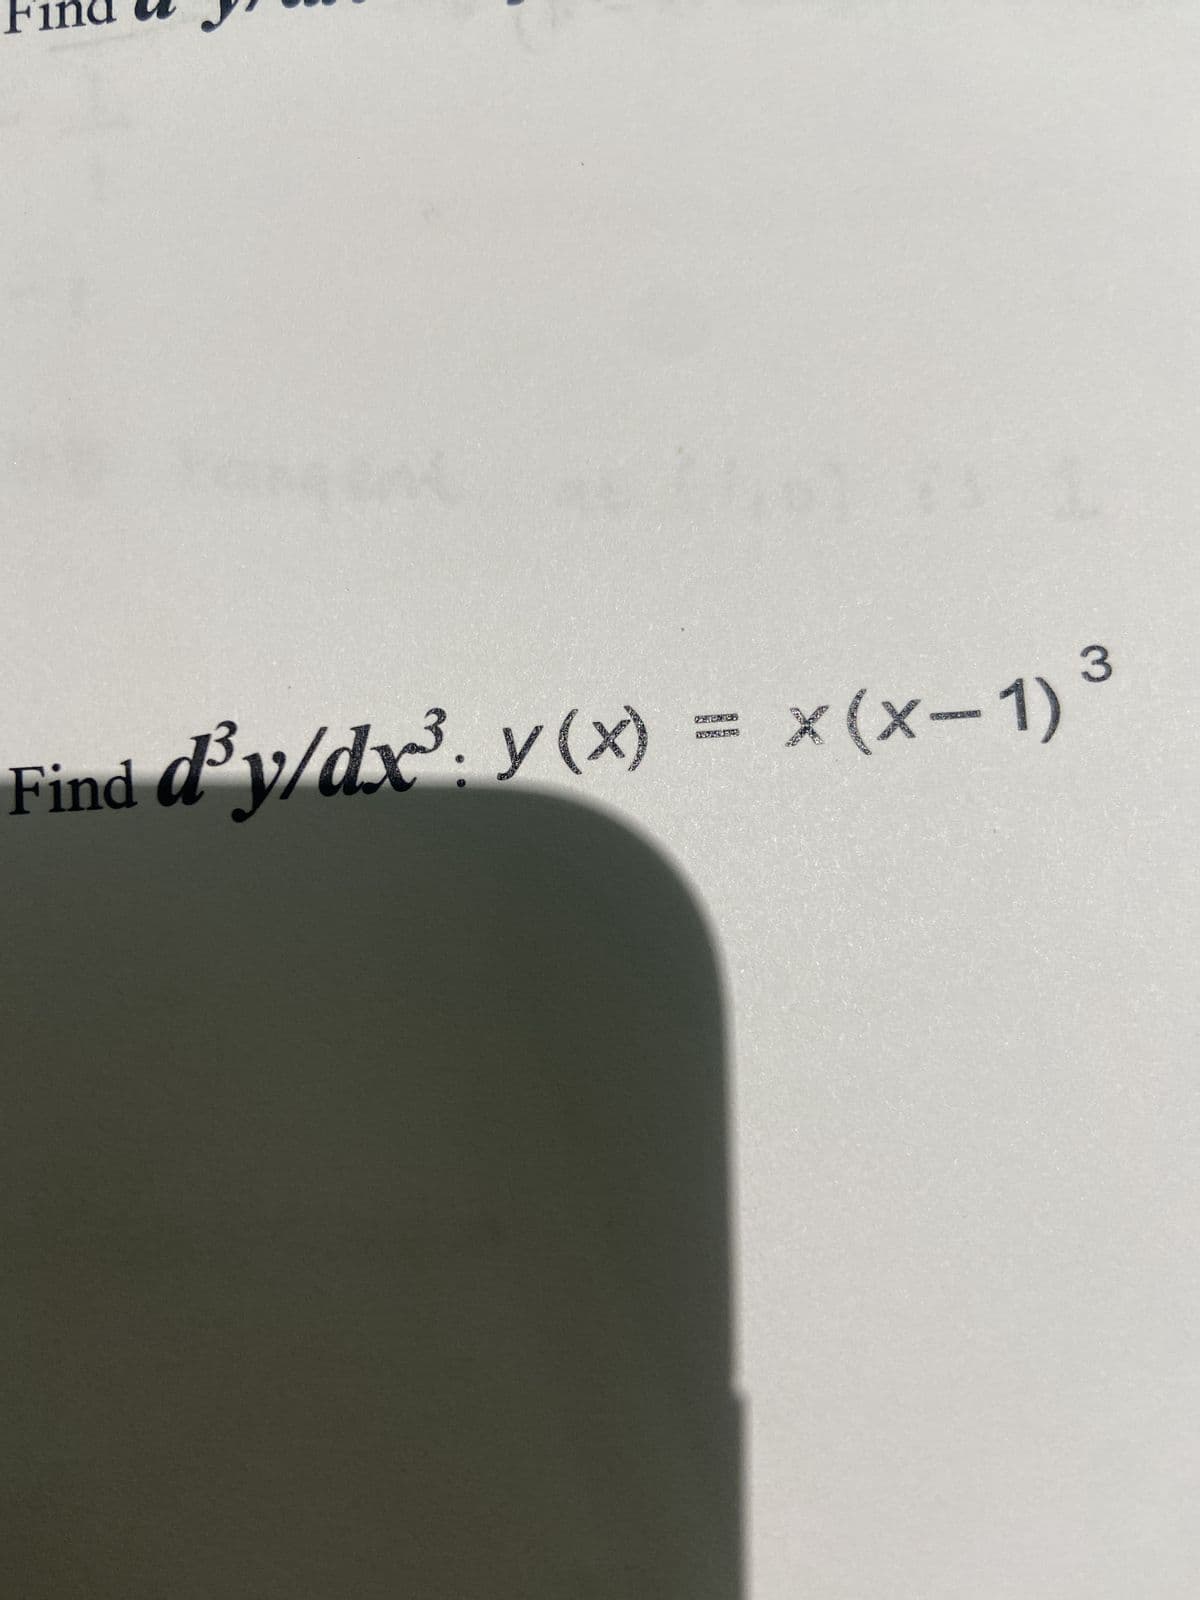 Find
Find d³y/dx³ y(x) = x(x-1) 3